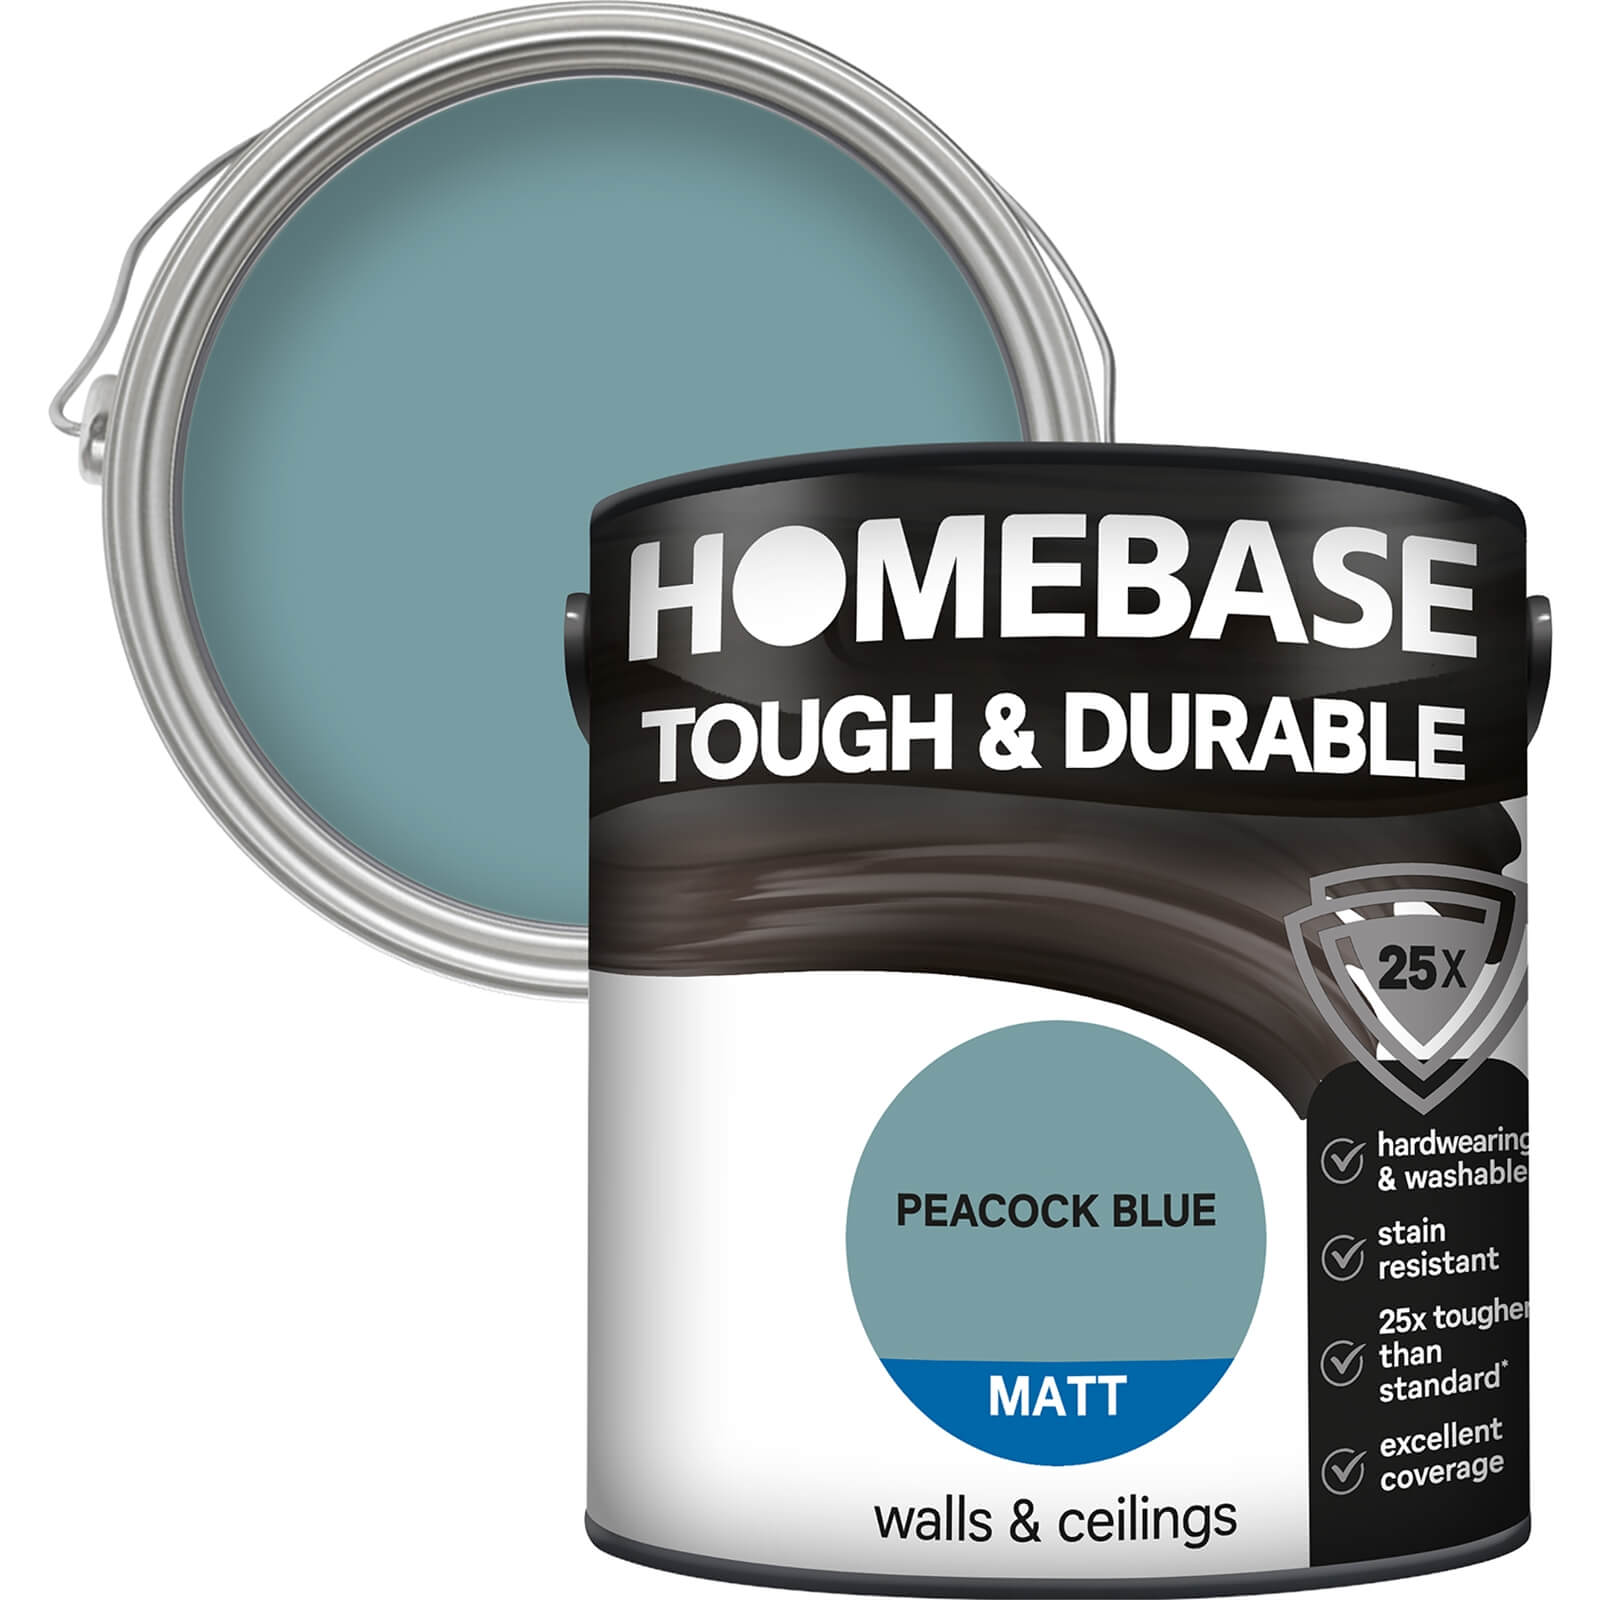 Homebase Tough & Durable Matt Paint Peacock Blue - 2.5L